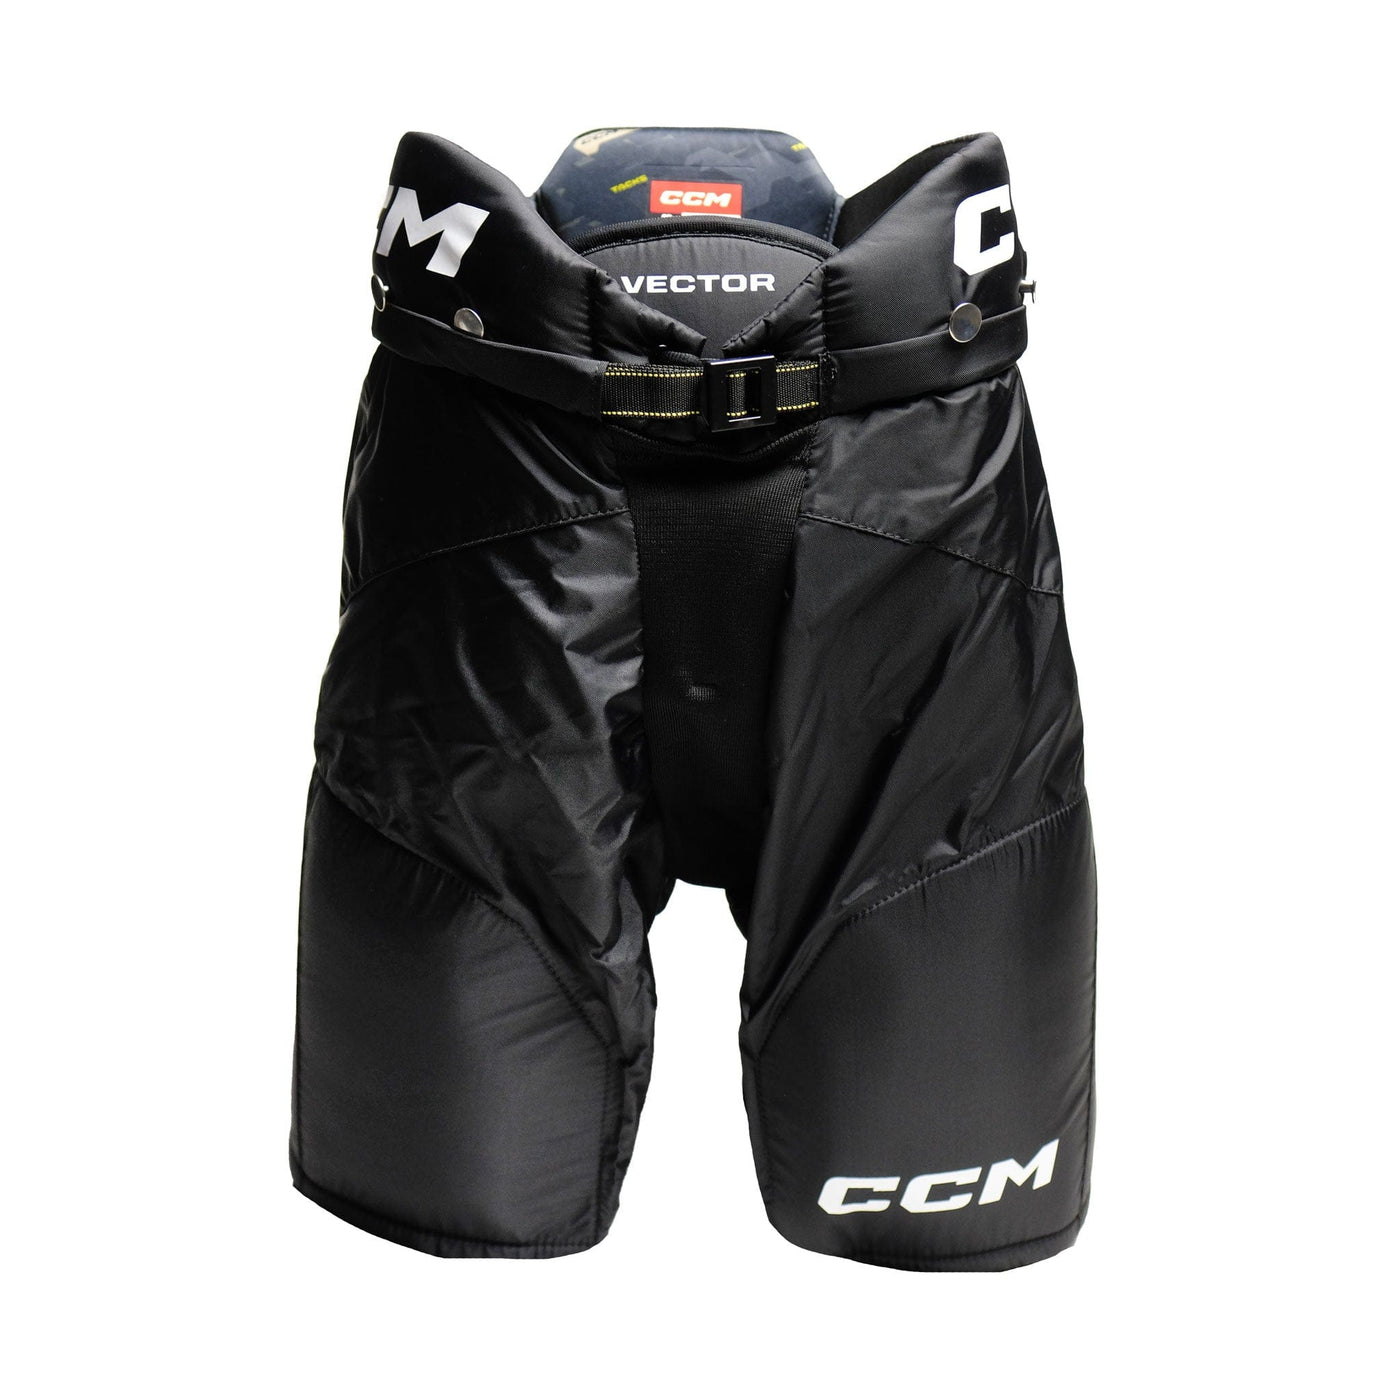 CCM Tacks Vector Junior Hockey Pants - The Hockey Shop Source For Sports